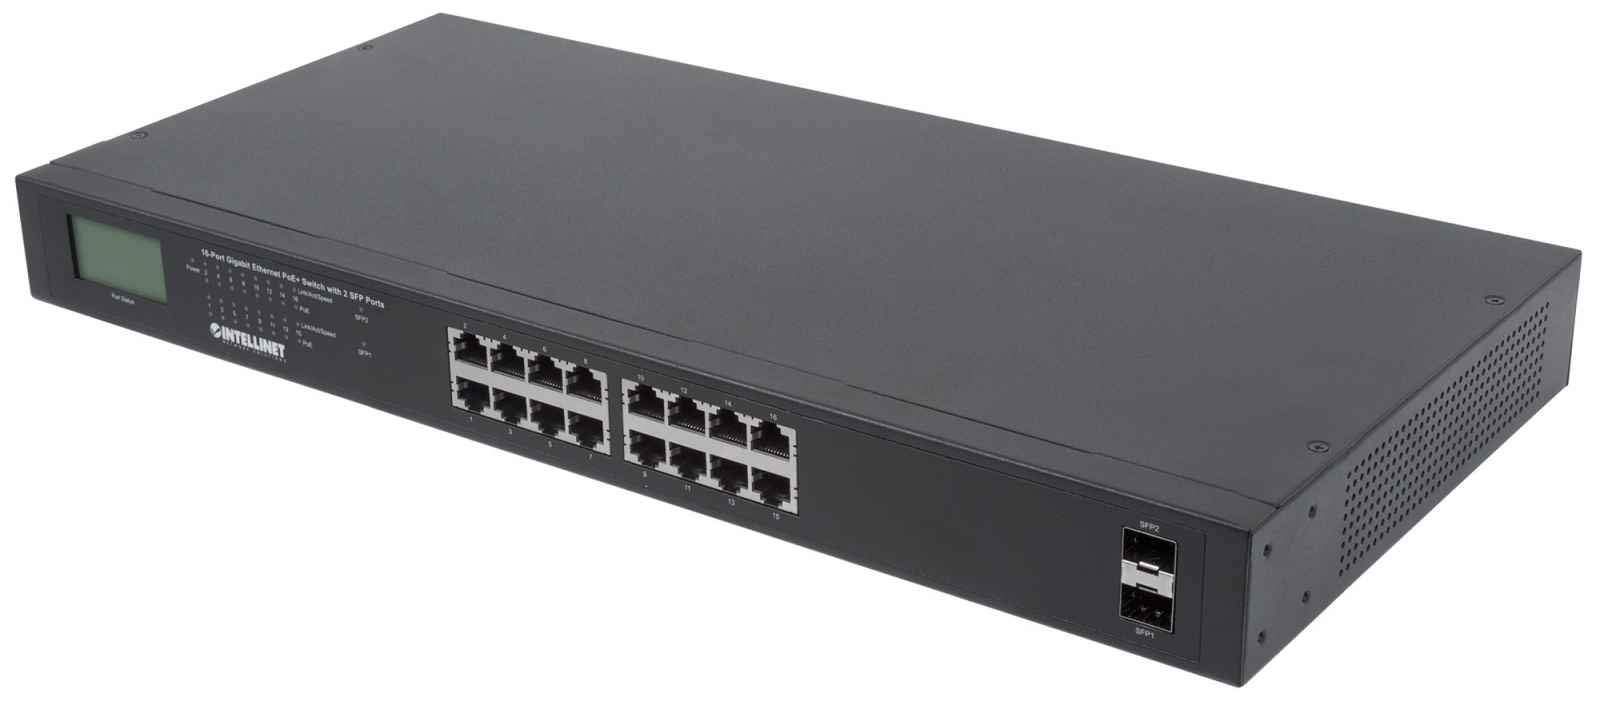 Intellinet 16Port Gigabit Ethernet PoE Switch mit 2 SFPPorts LCDAnzeige IEEE 802.3at/af Power over Ethernet (PoE/PoE)konform 370 W Endspan 19 Rackmount 19 Zoll 561259 schwarz